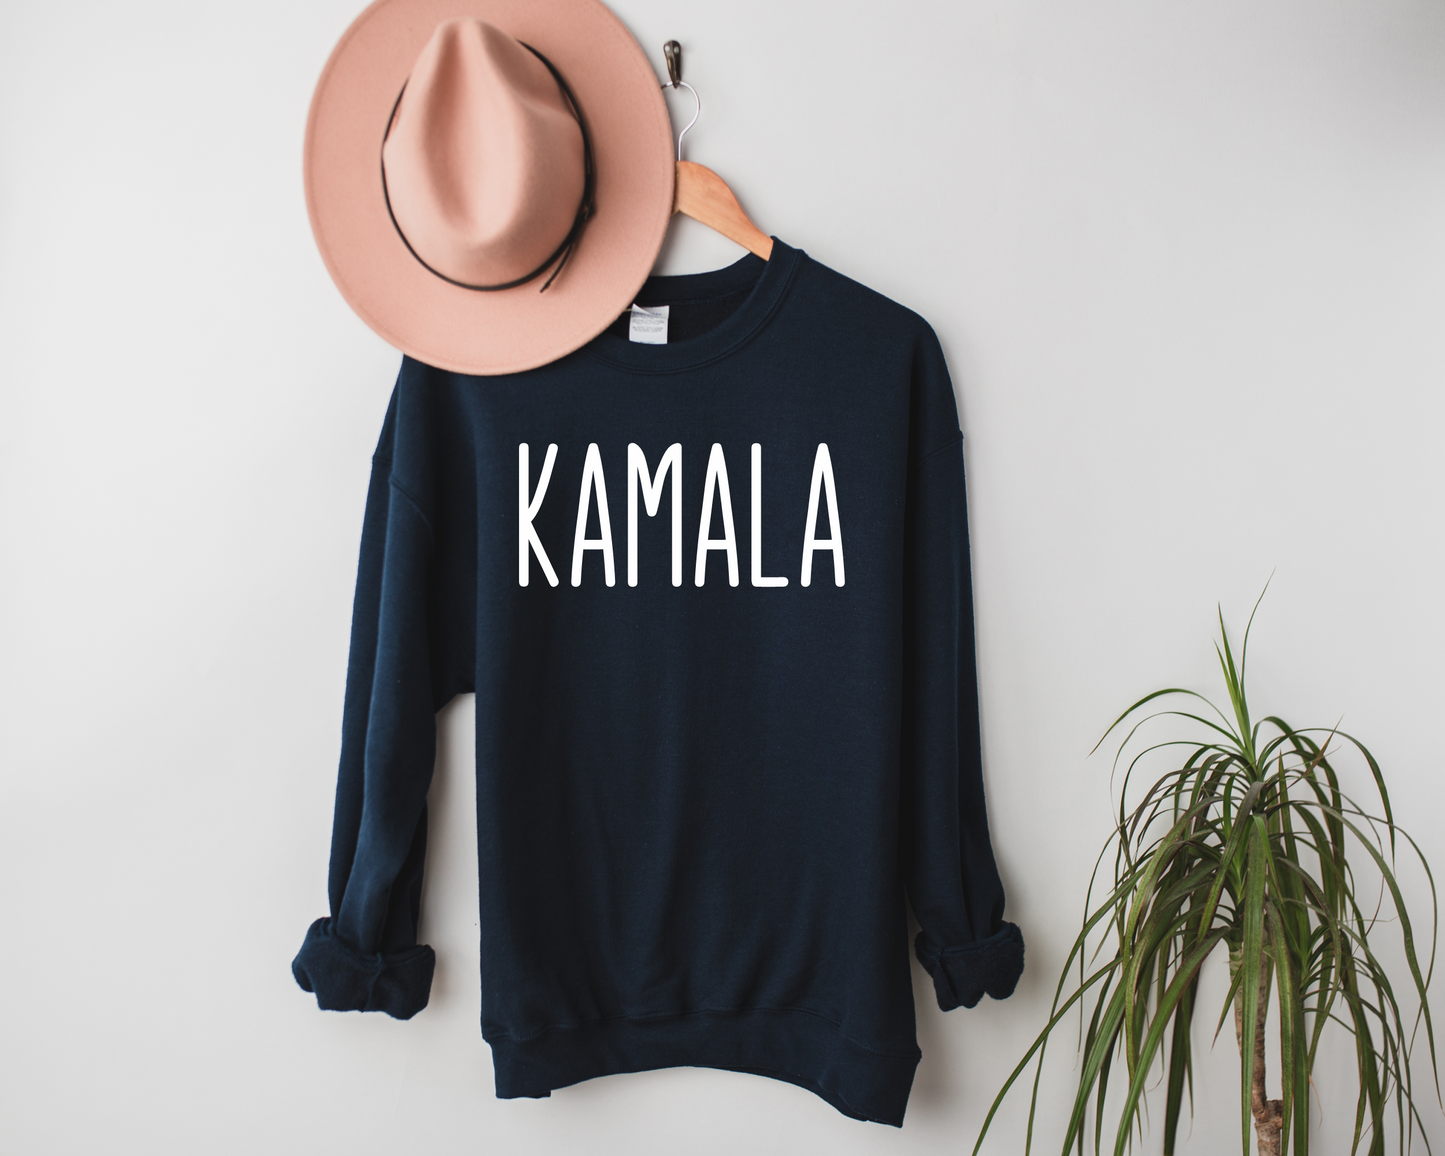 Kamala Harris Sweatshirt, Kamala Sweatshirt, Election 2020, Harris 2020, Kamala Harris Shirt, Women Empowerment Shirt , Feminism Shirt